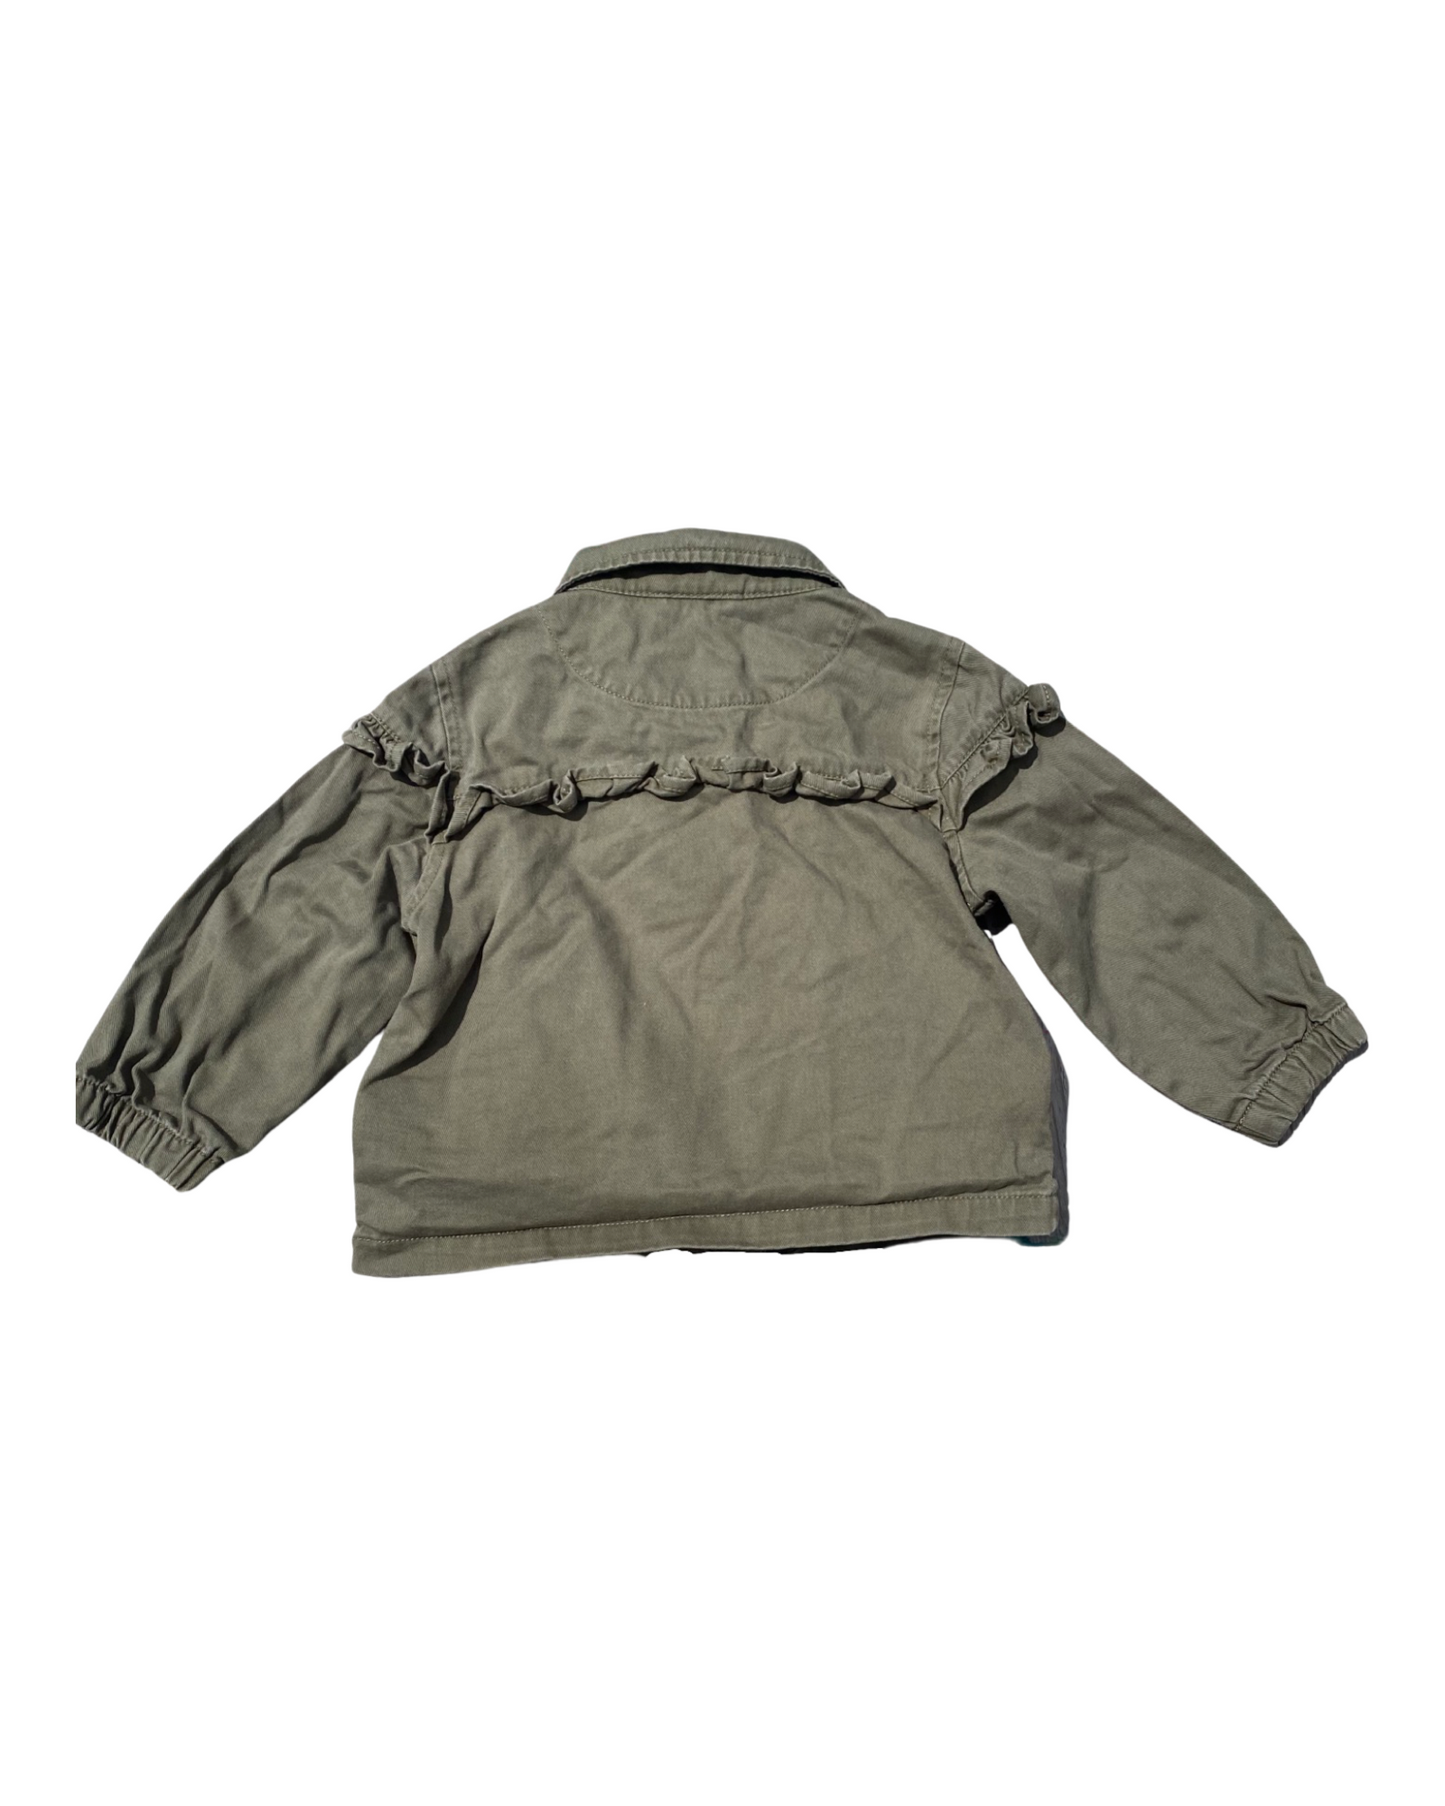 Mango khaki cotton jacket (size 12-18mths)